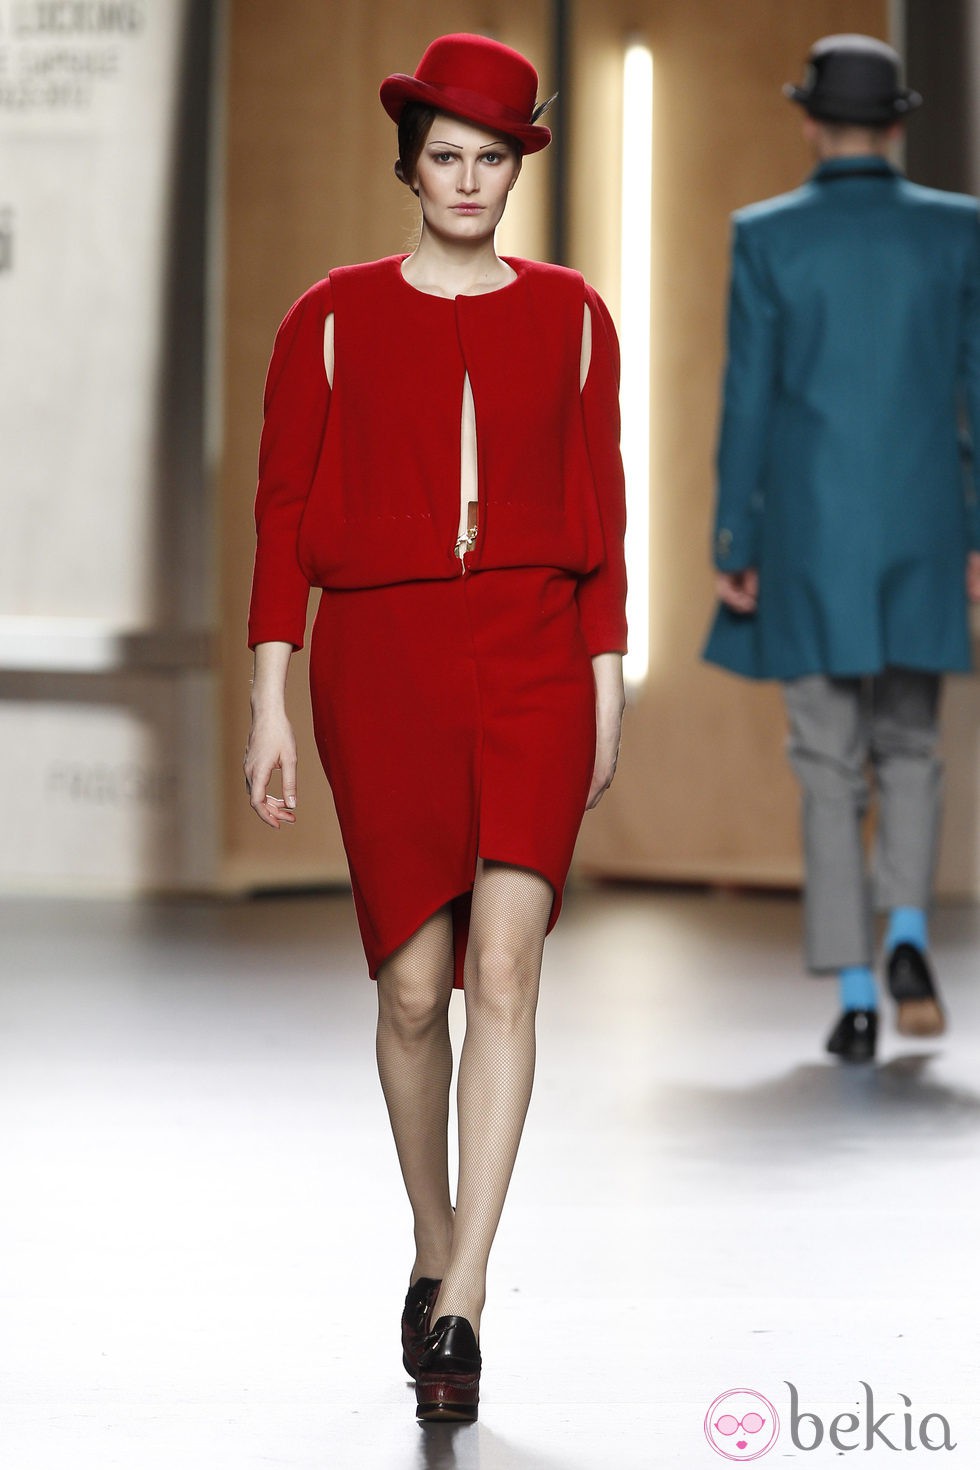 Cut out dress rojo de Ana Locking en Fashion Week Madrid